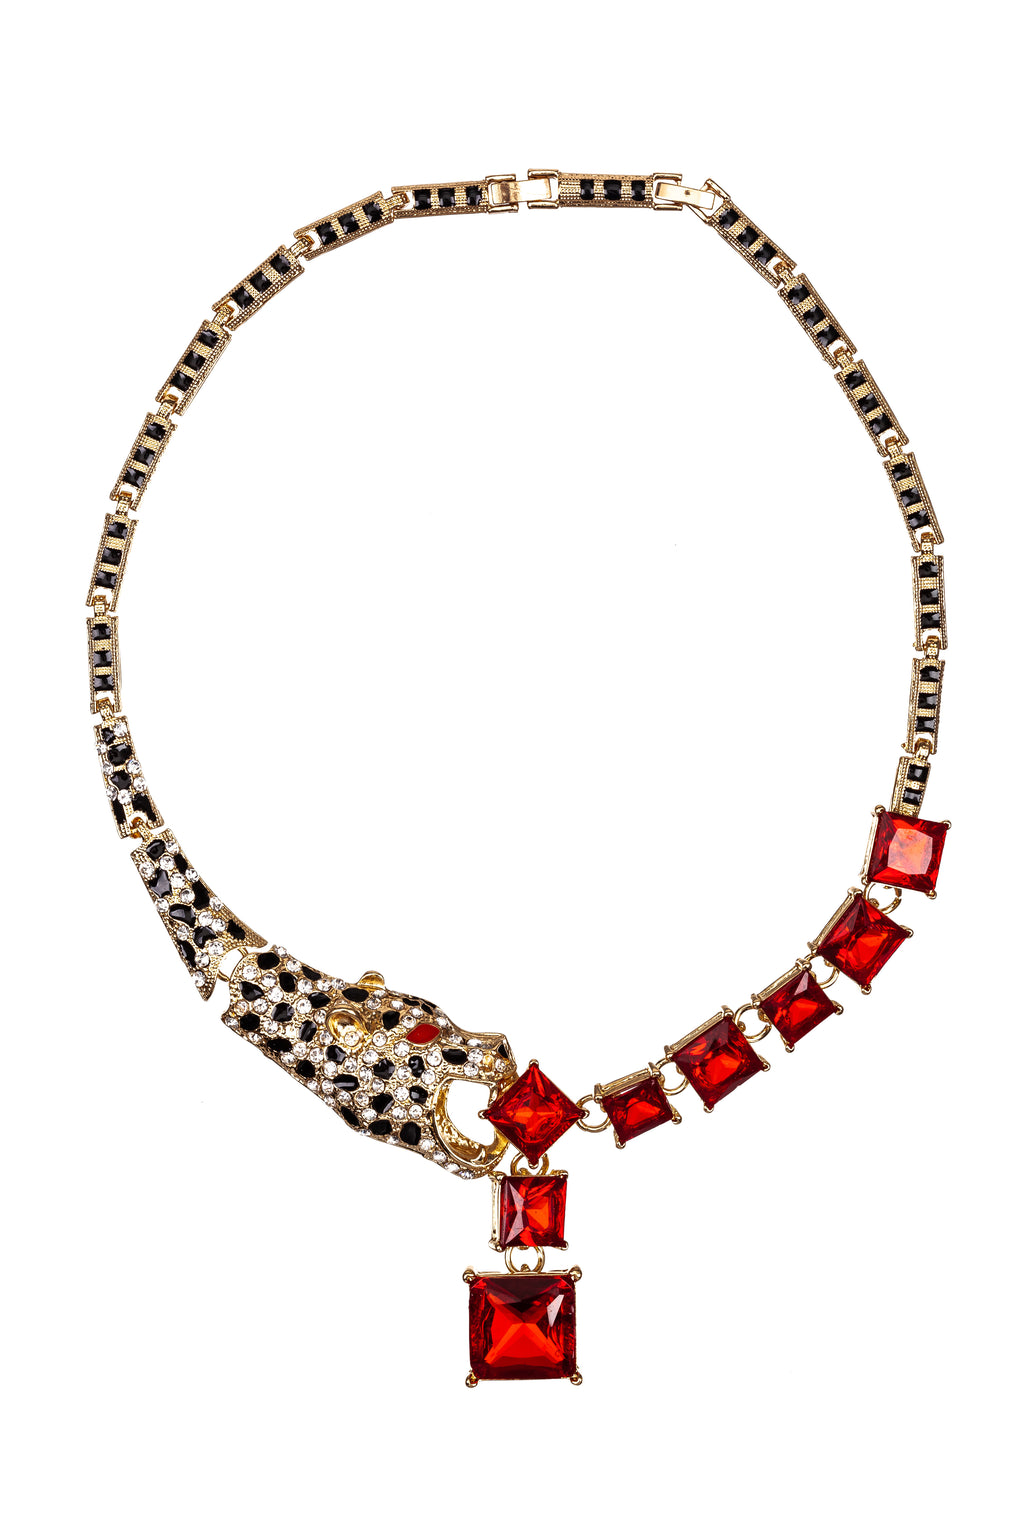 Leopard CZ crystal necklace.